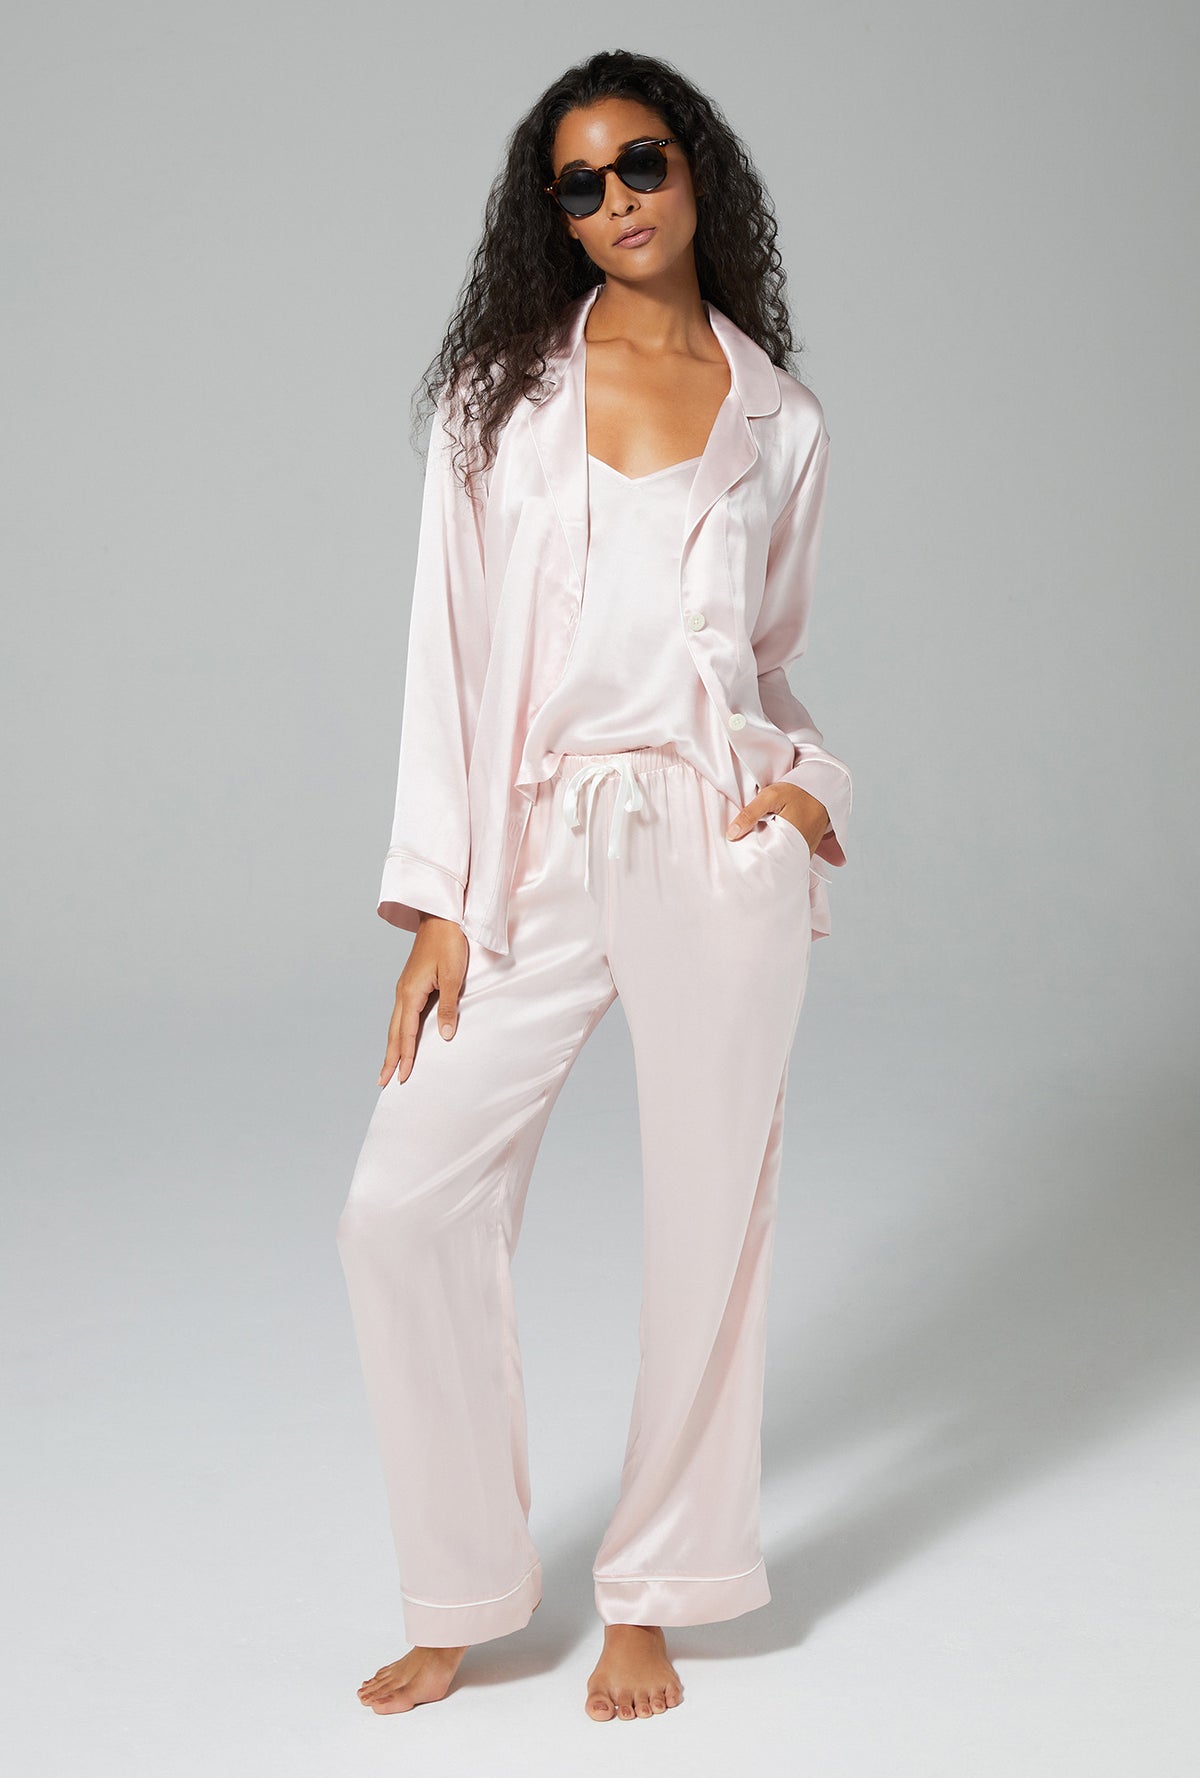 Washable Silk Pajama Sets for Women